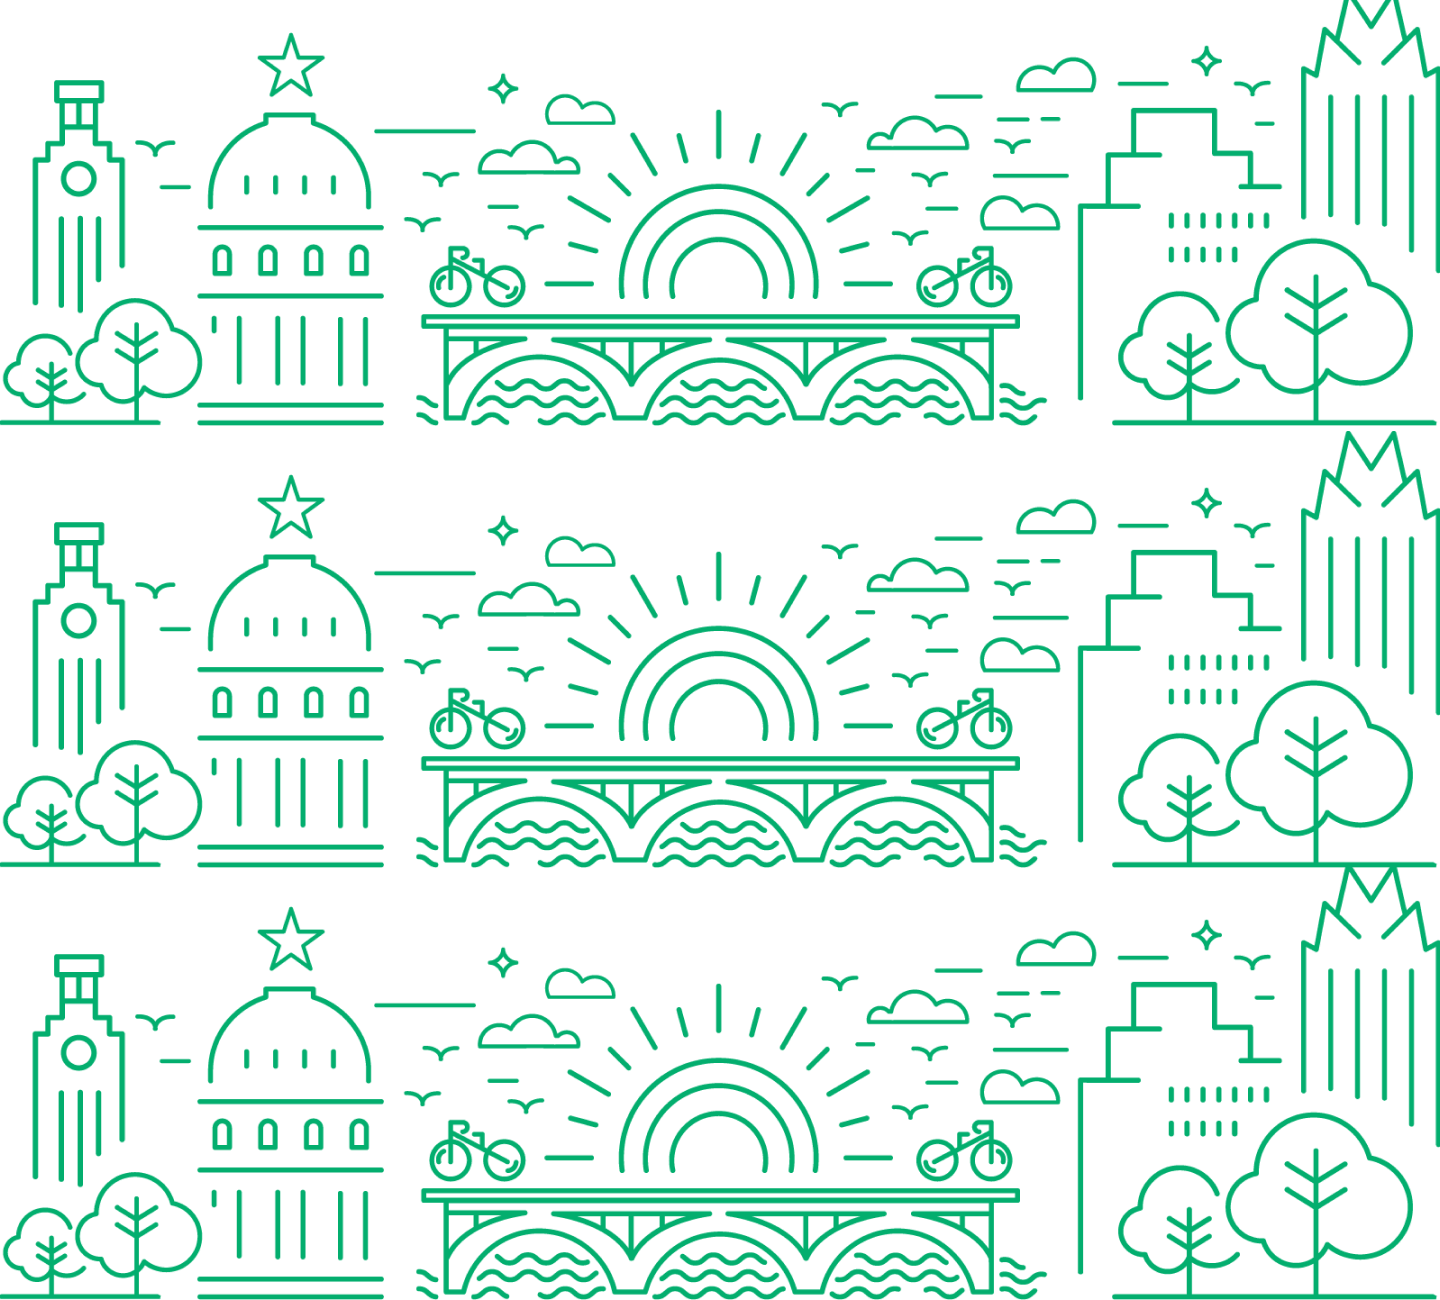 Green outline of the Austin city skyline.